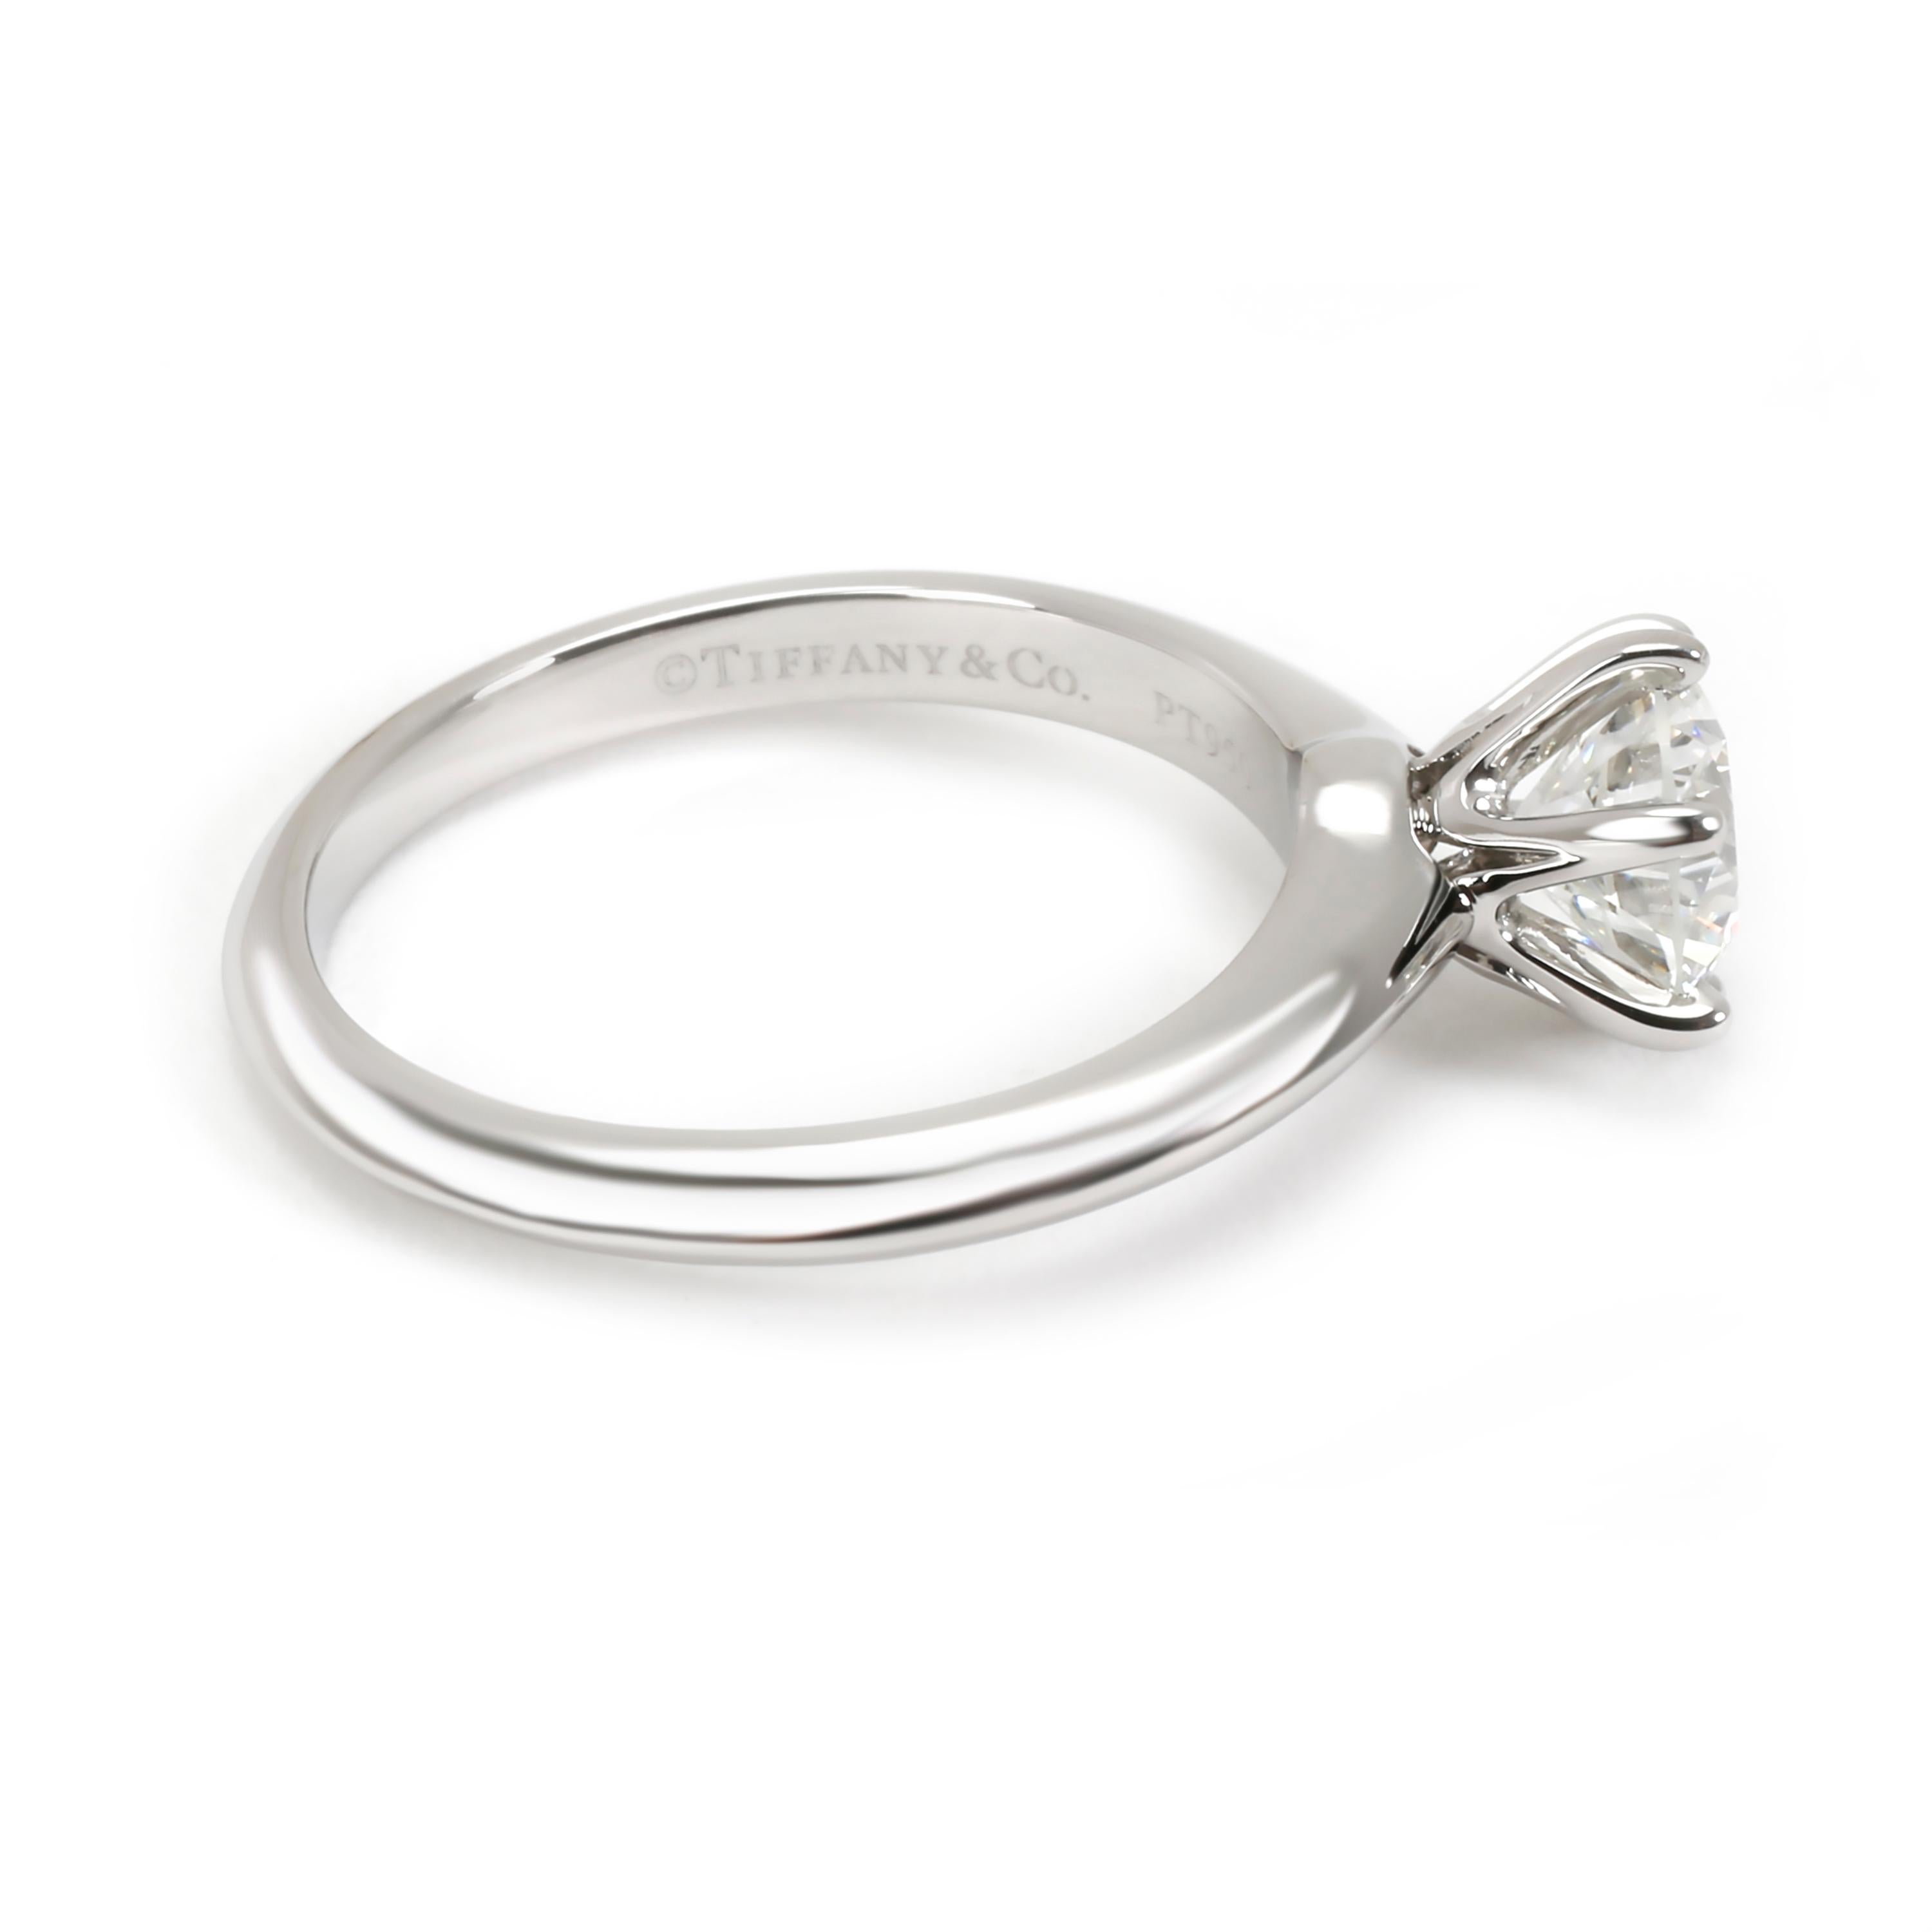 Round Cut Tiffany & Co. Solitaire Diamond Engagement Ring in Platinum H VS1 1.02 Carat